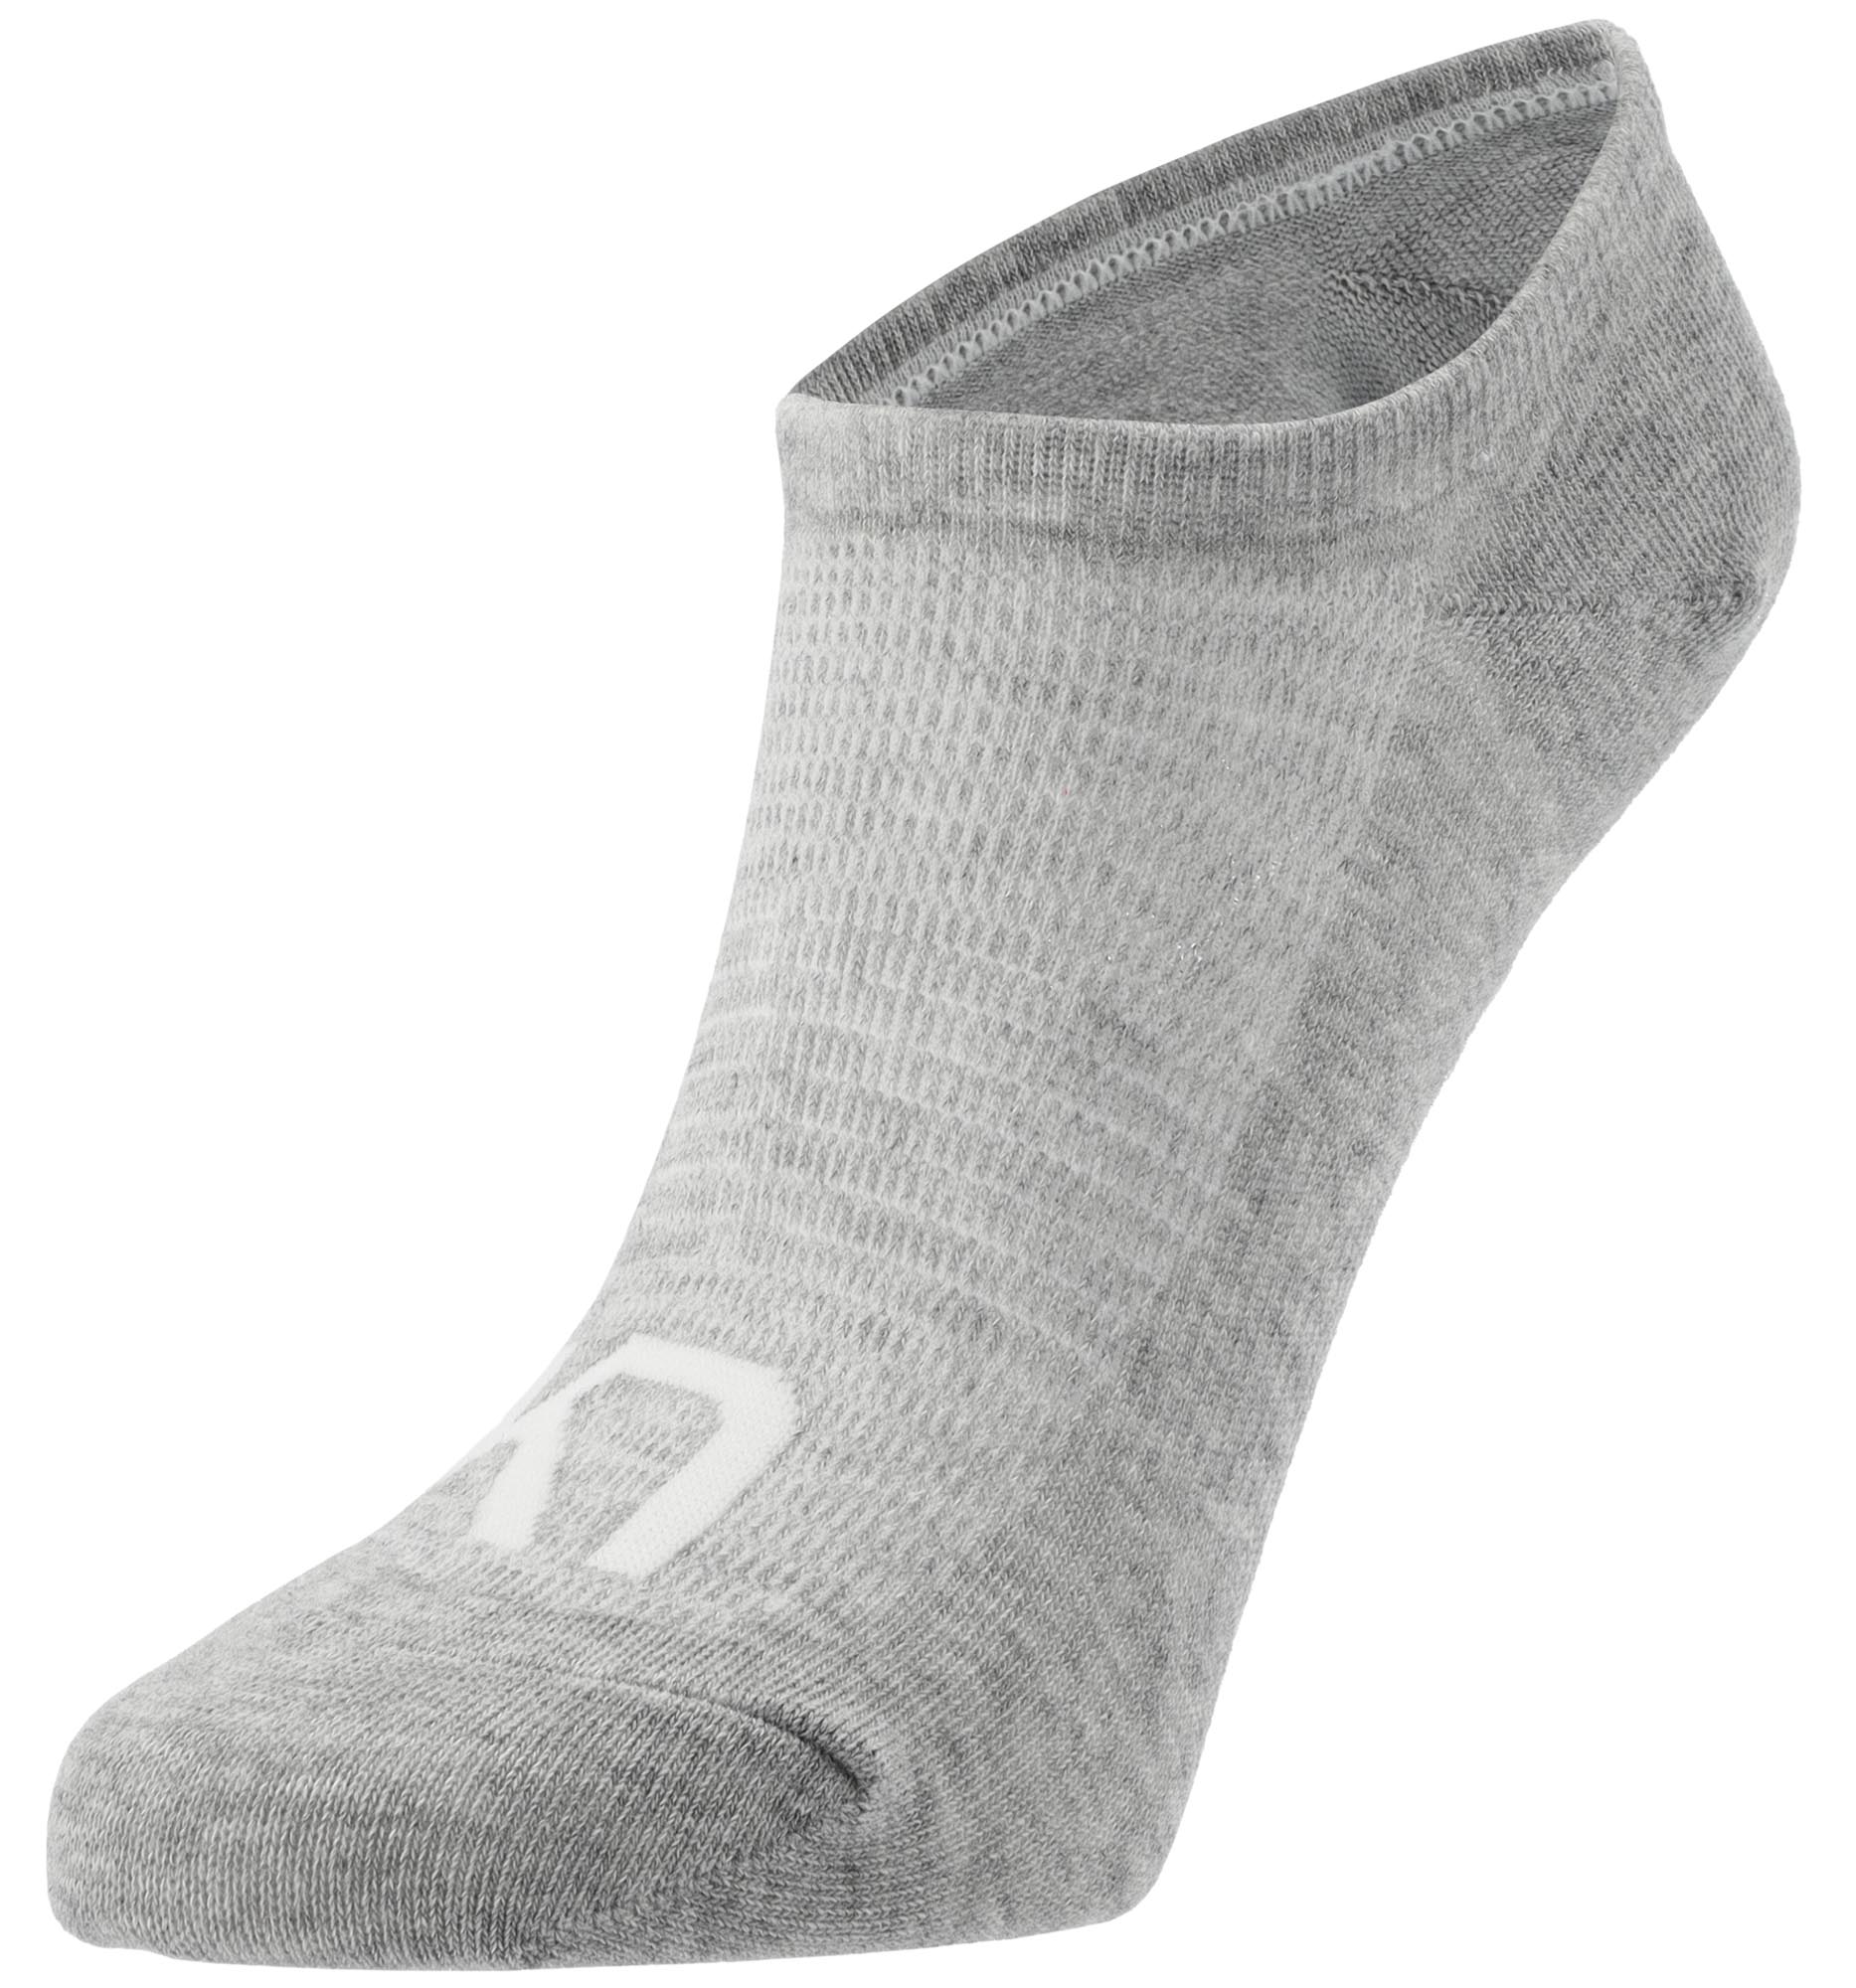 Women’s everyday socks